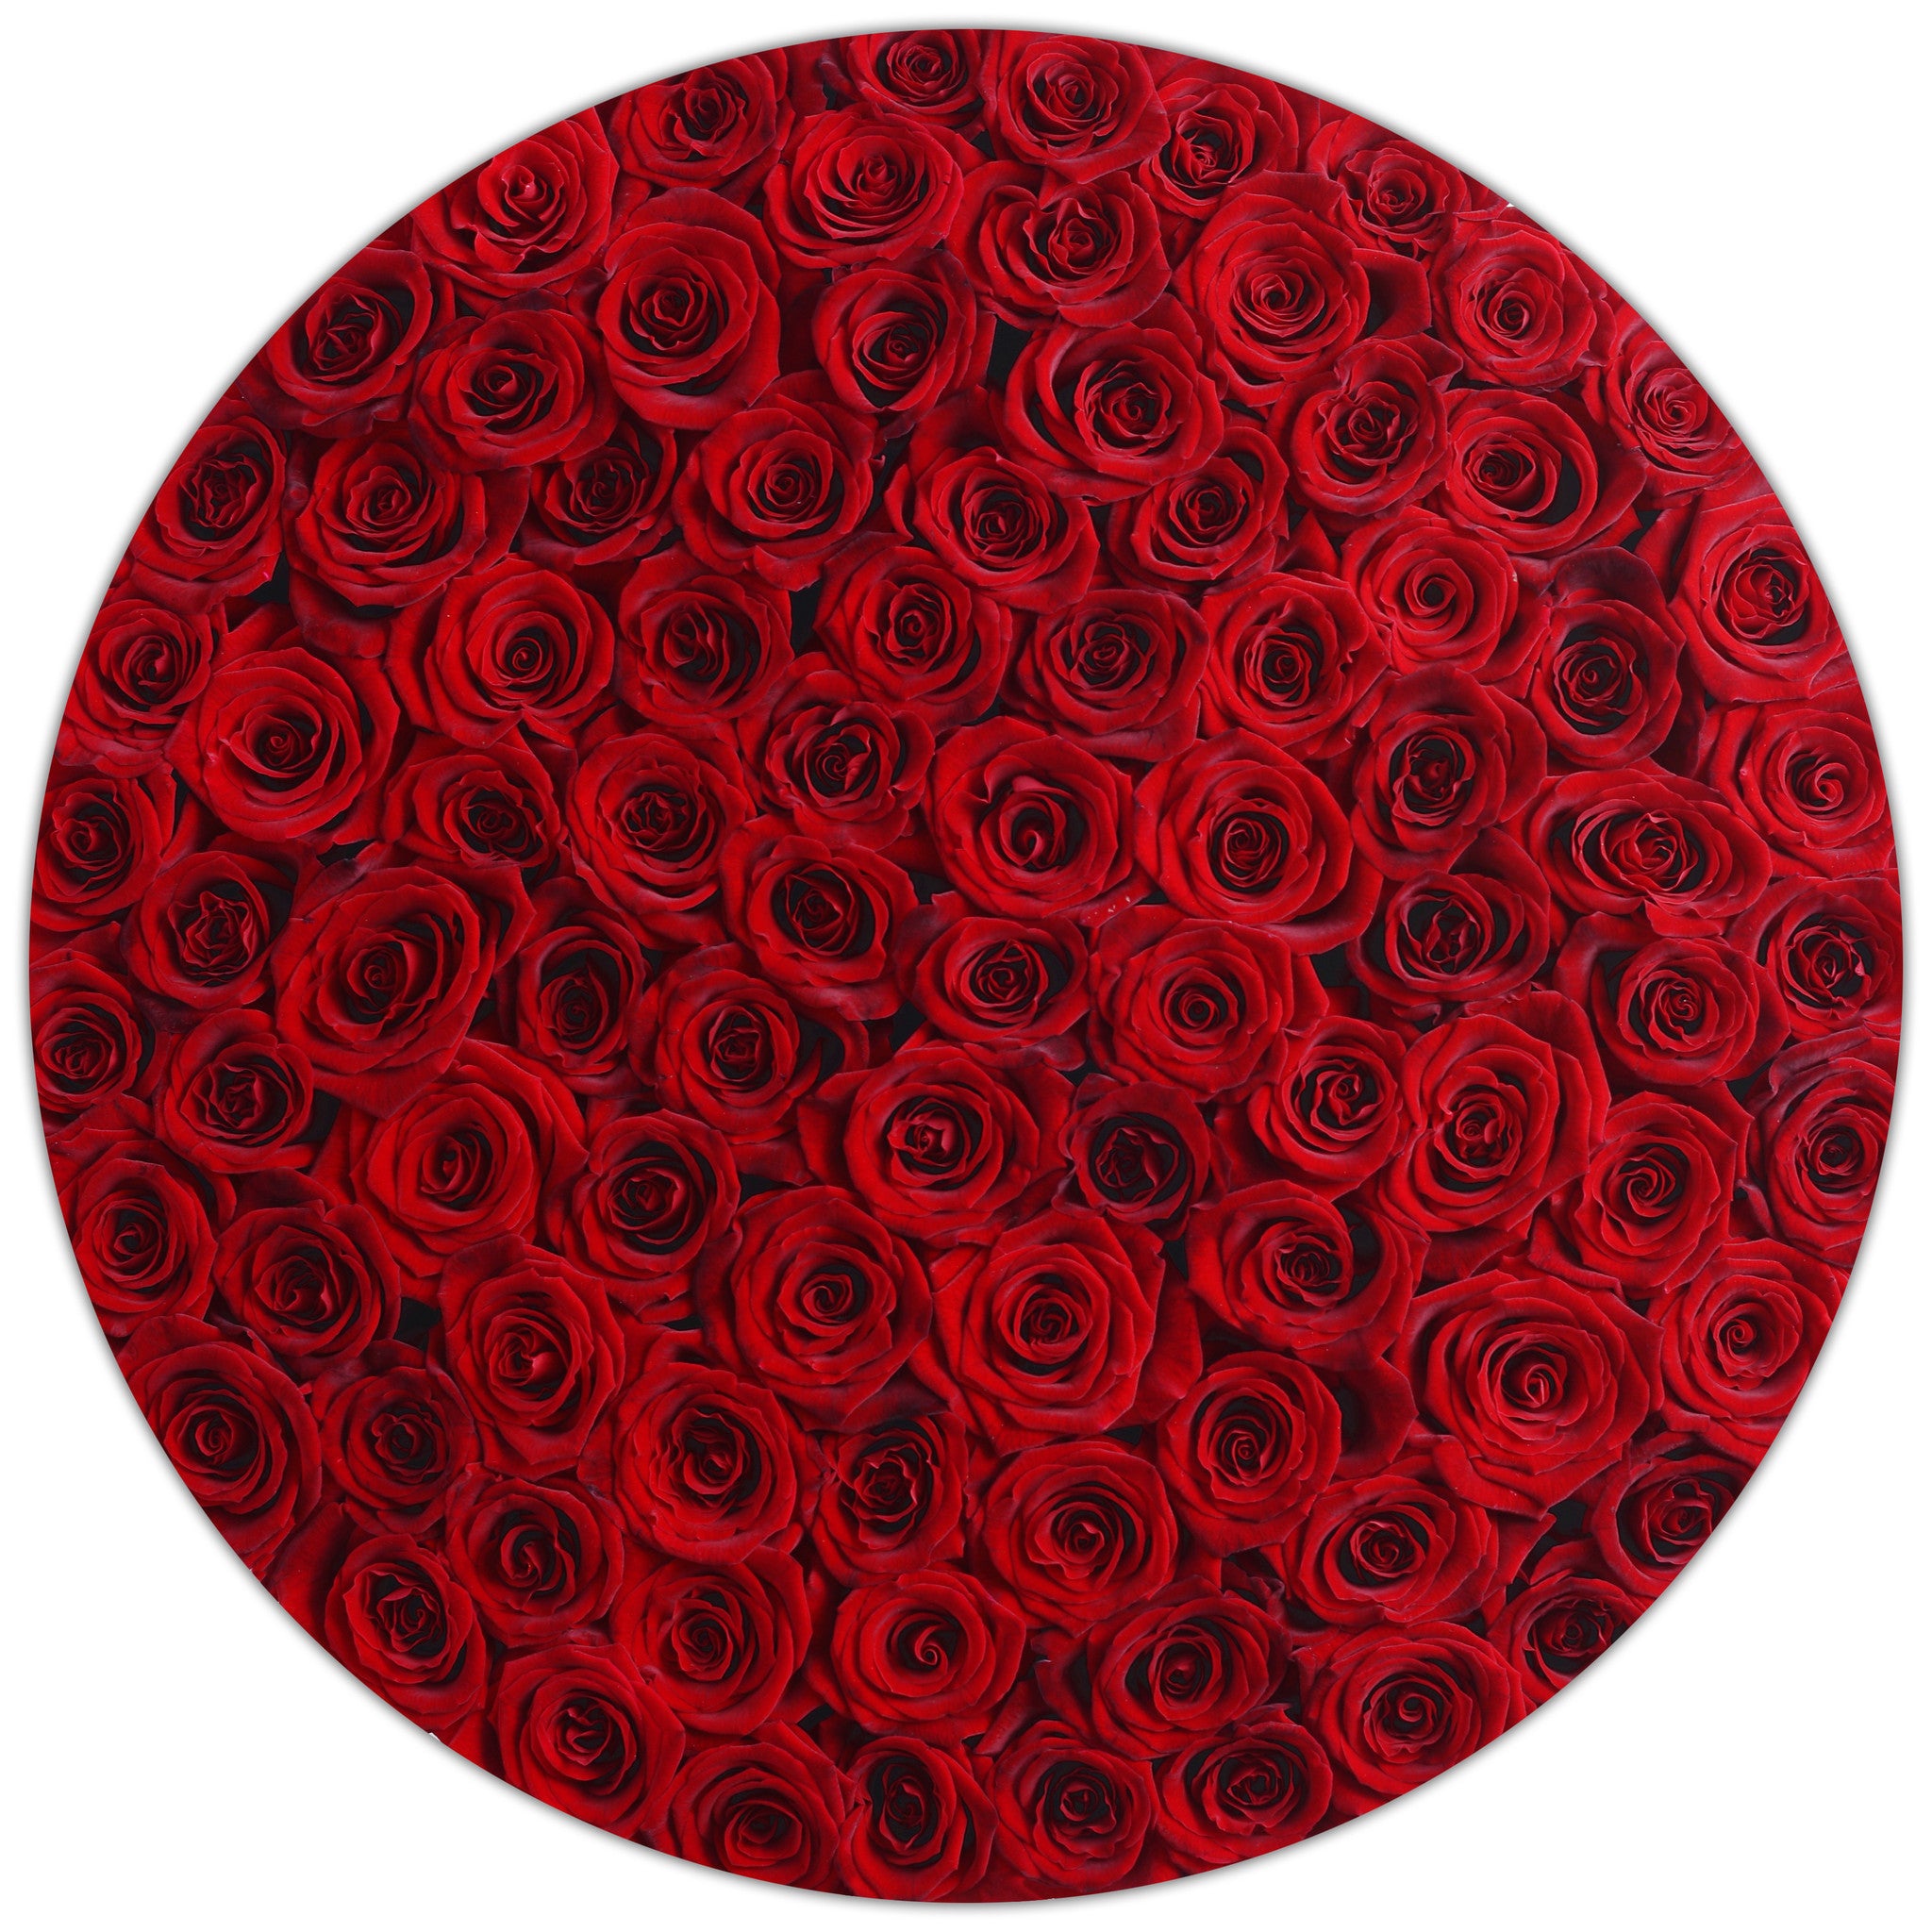 The Million - Red Roses - Black box - The Million Roses Budapest